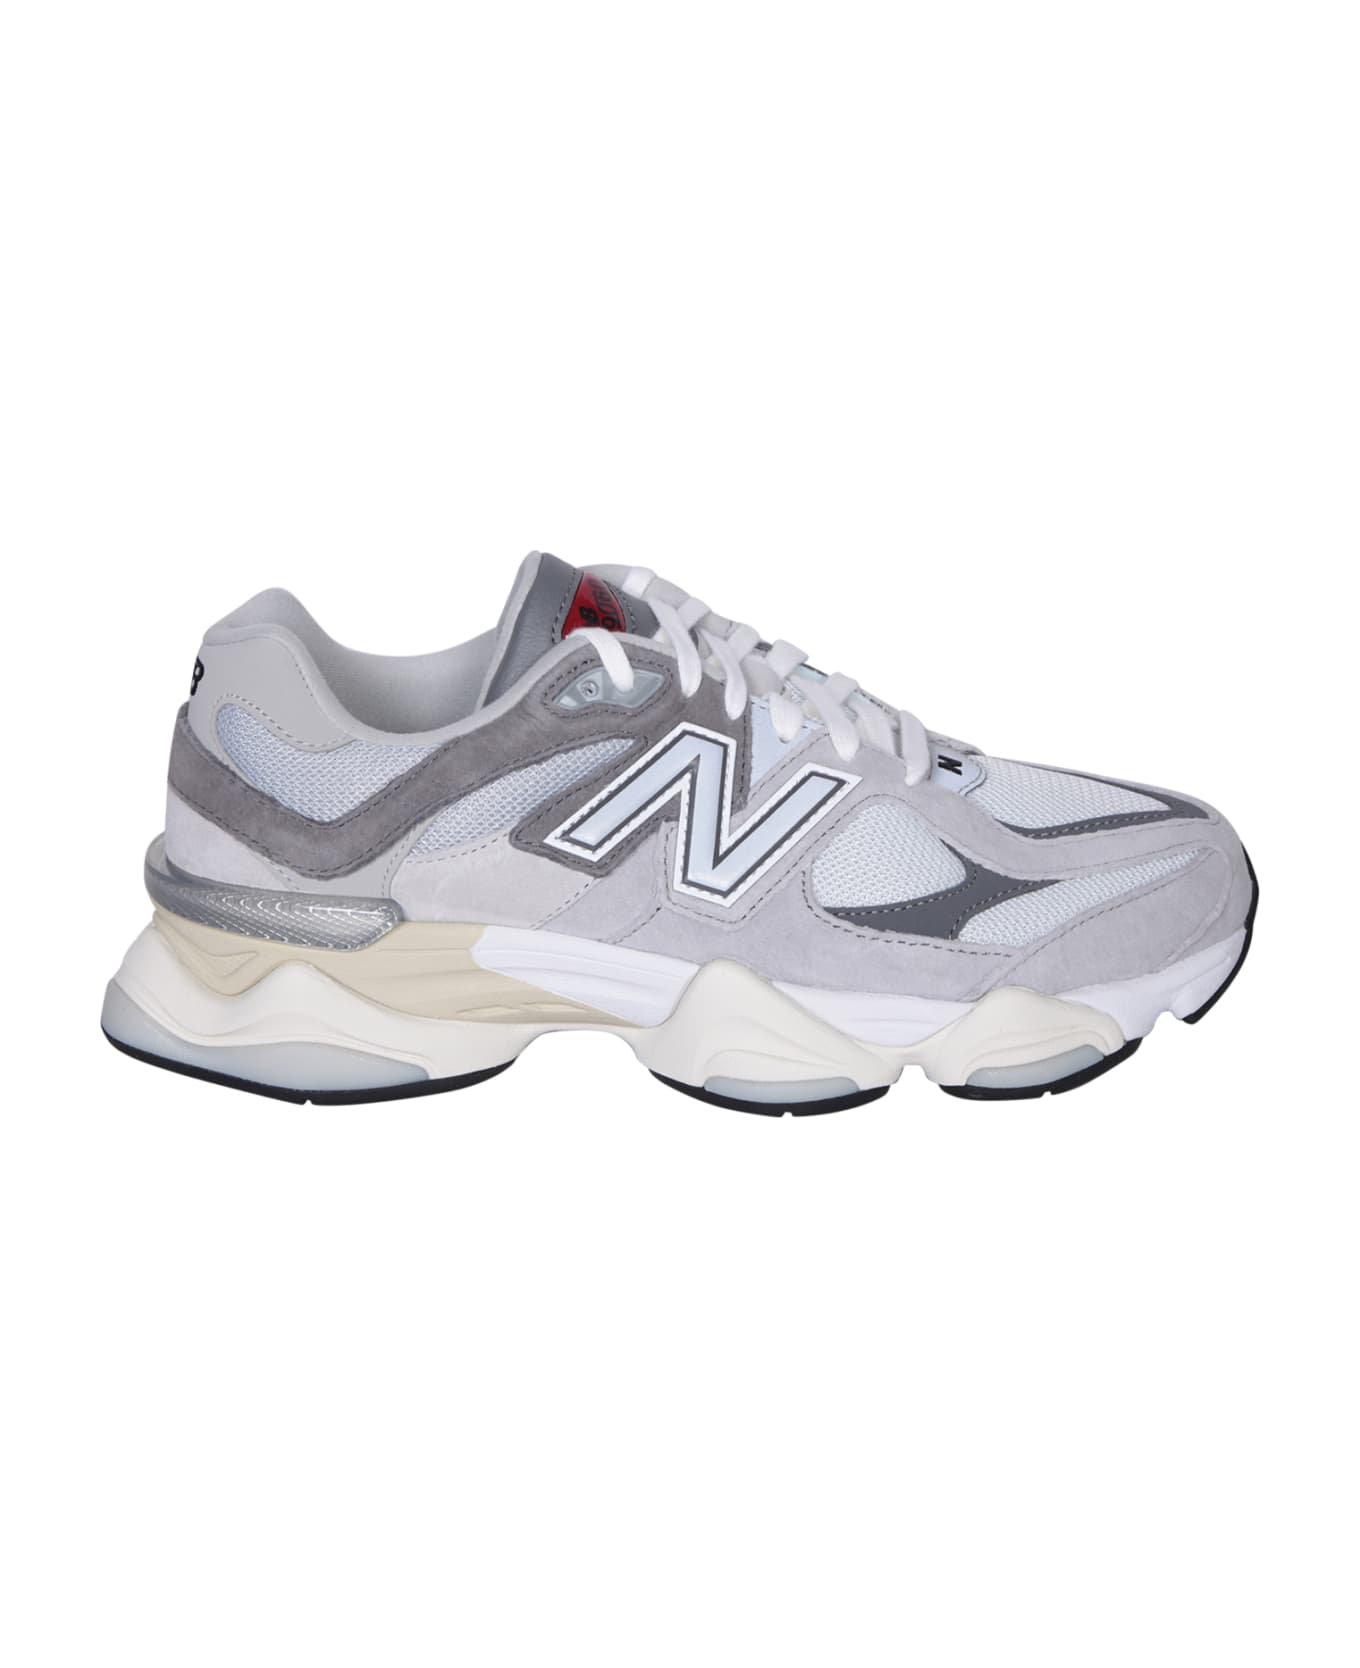 New Balance 9060 Grey Sneakers - Grey